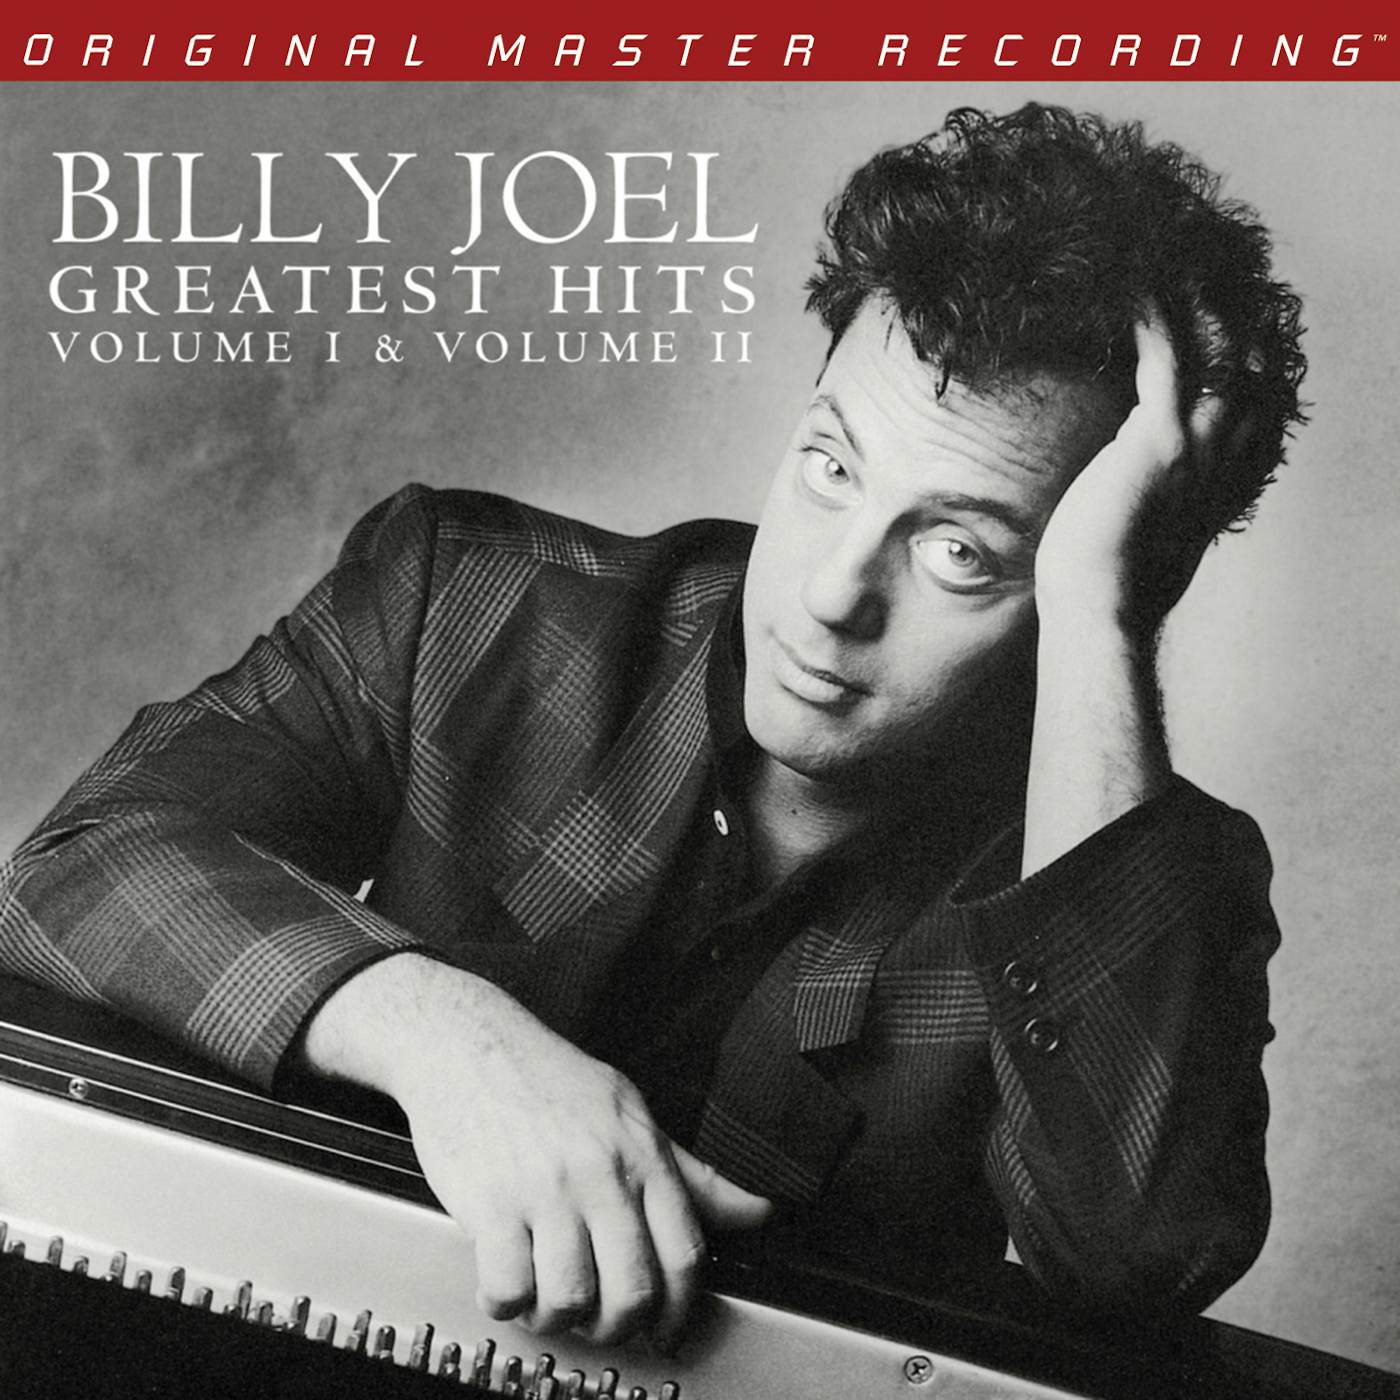 Billy Joel Greatest Hits Volume I & Volume II Vinyl Record